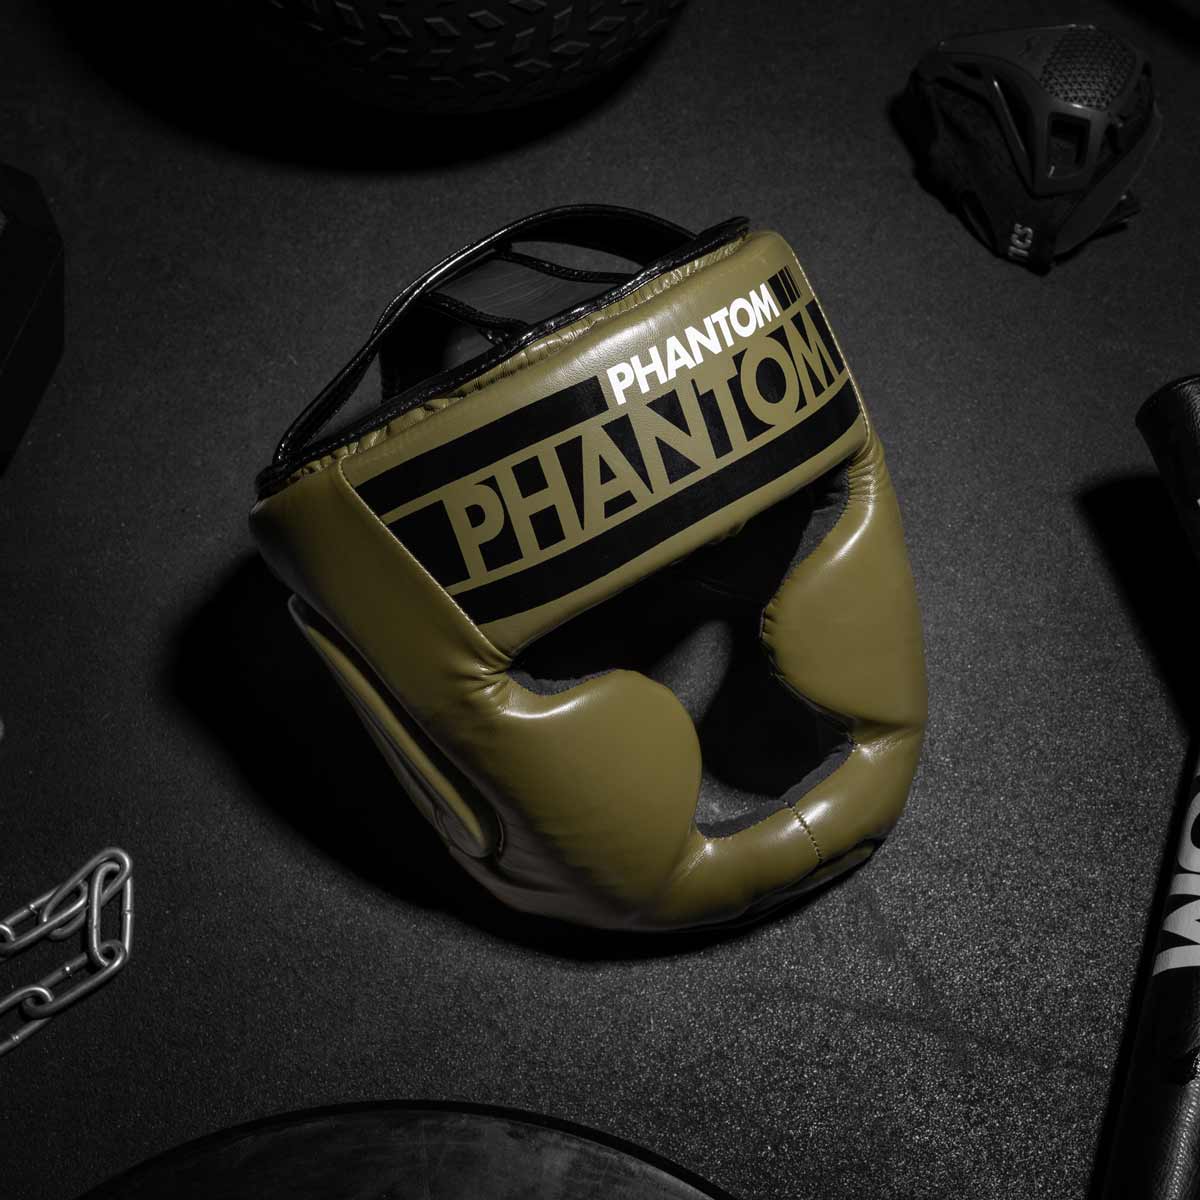 Der Phantom APEX Full Face Kopfschutz in Army Grün am Gymboden neben der Phantom Trainingsmaske